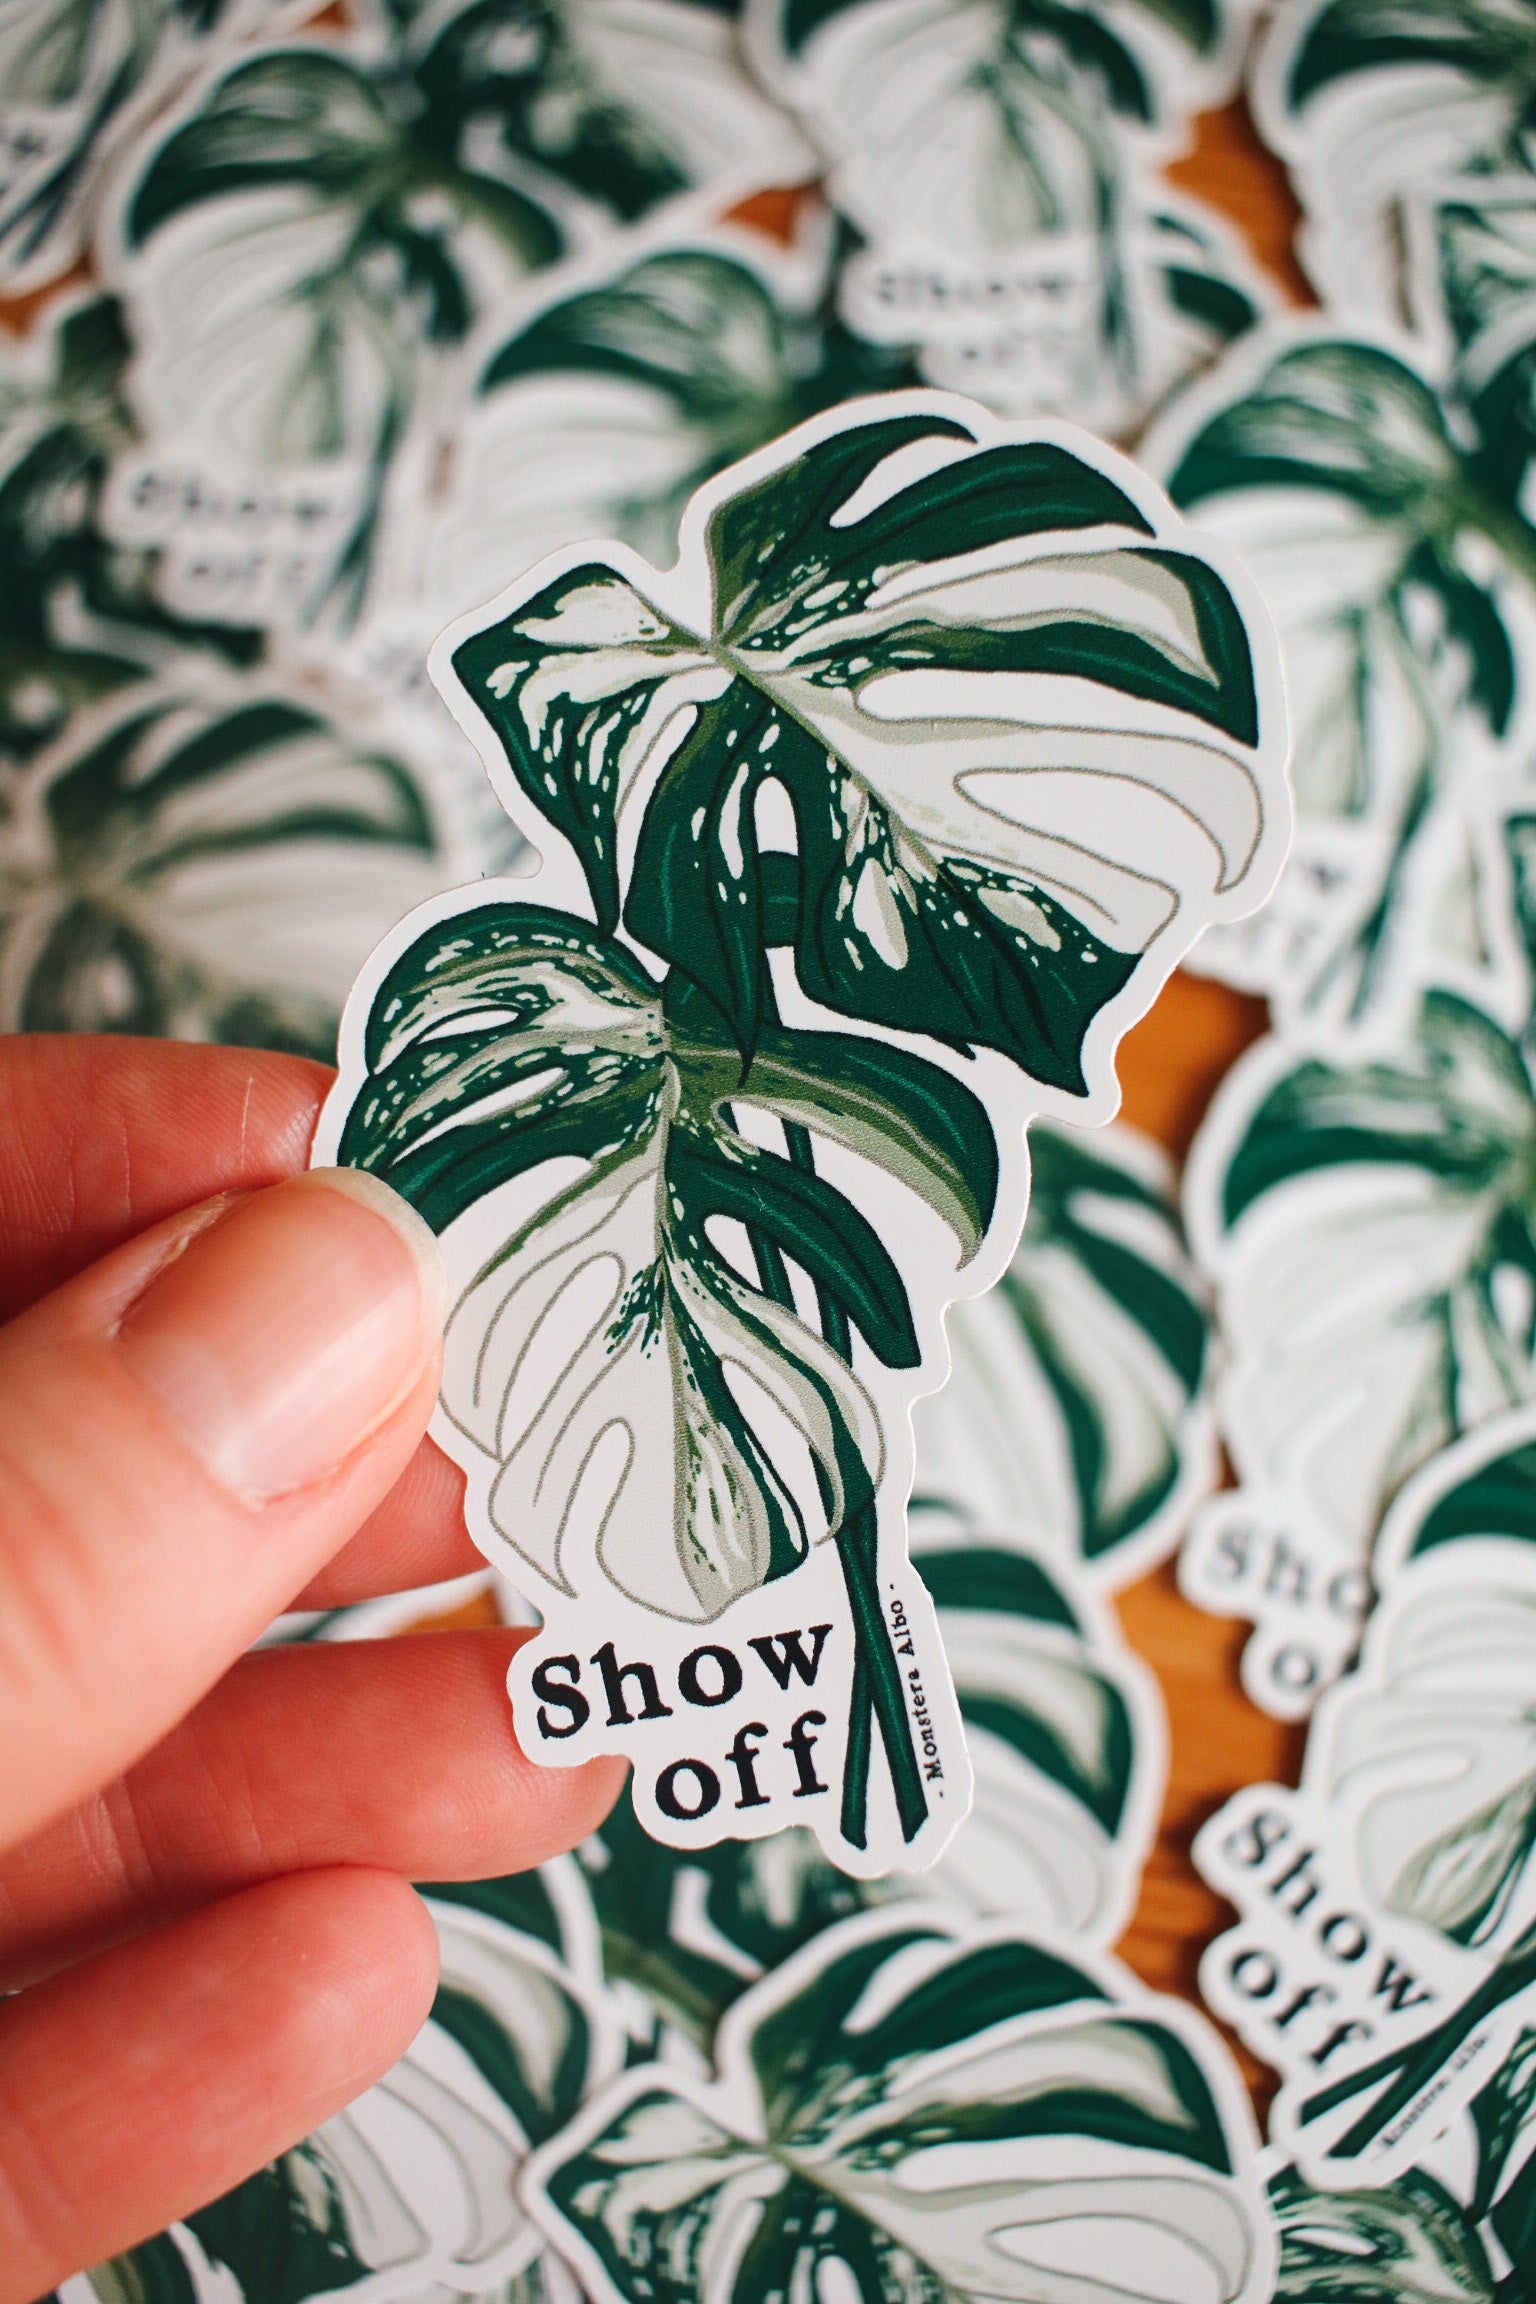 Show Off - Monstera Albo Plant Sticker